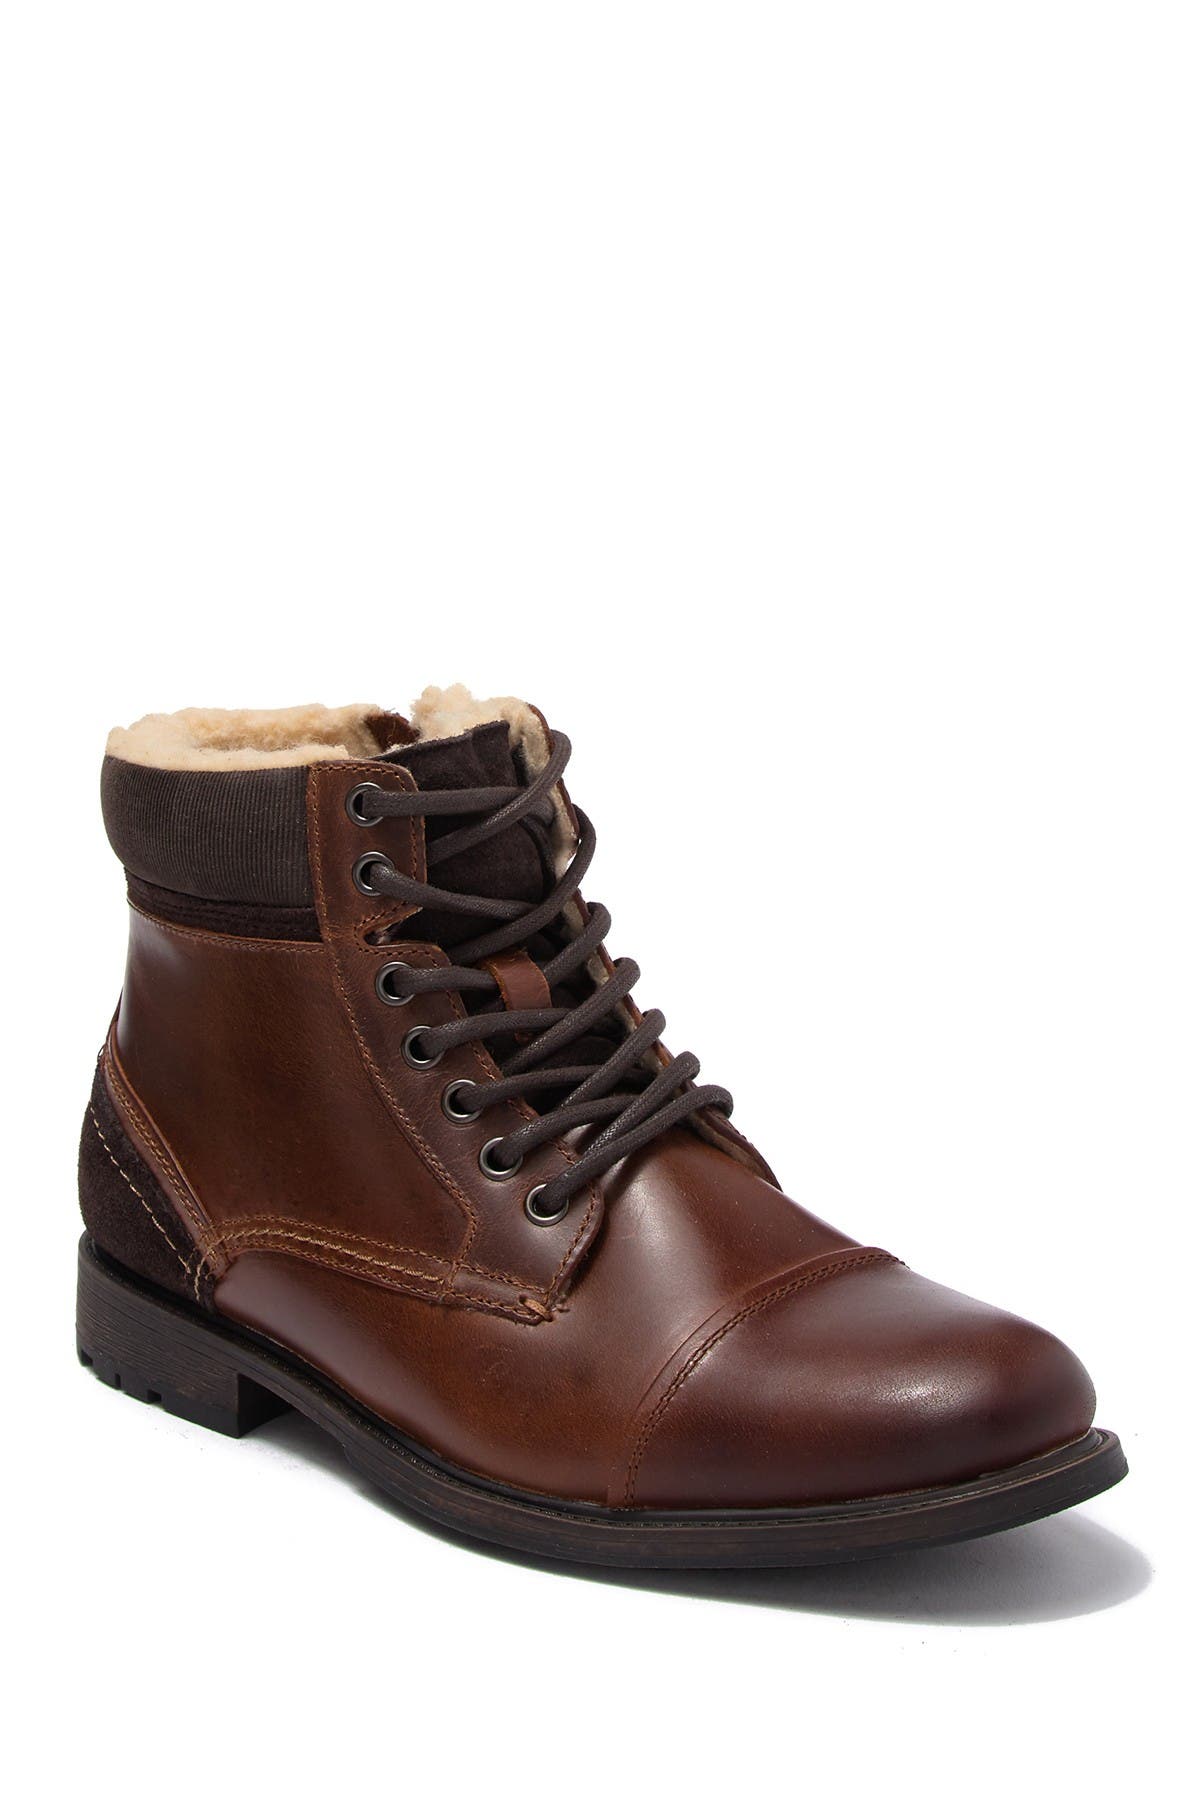 Aldo | Briewiel Leather Faux Fur Boot 